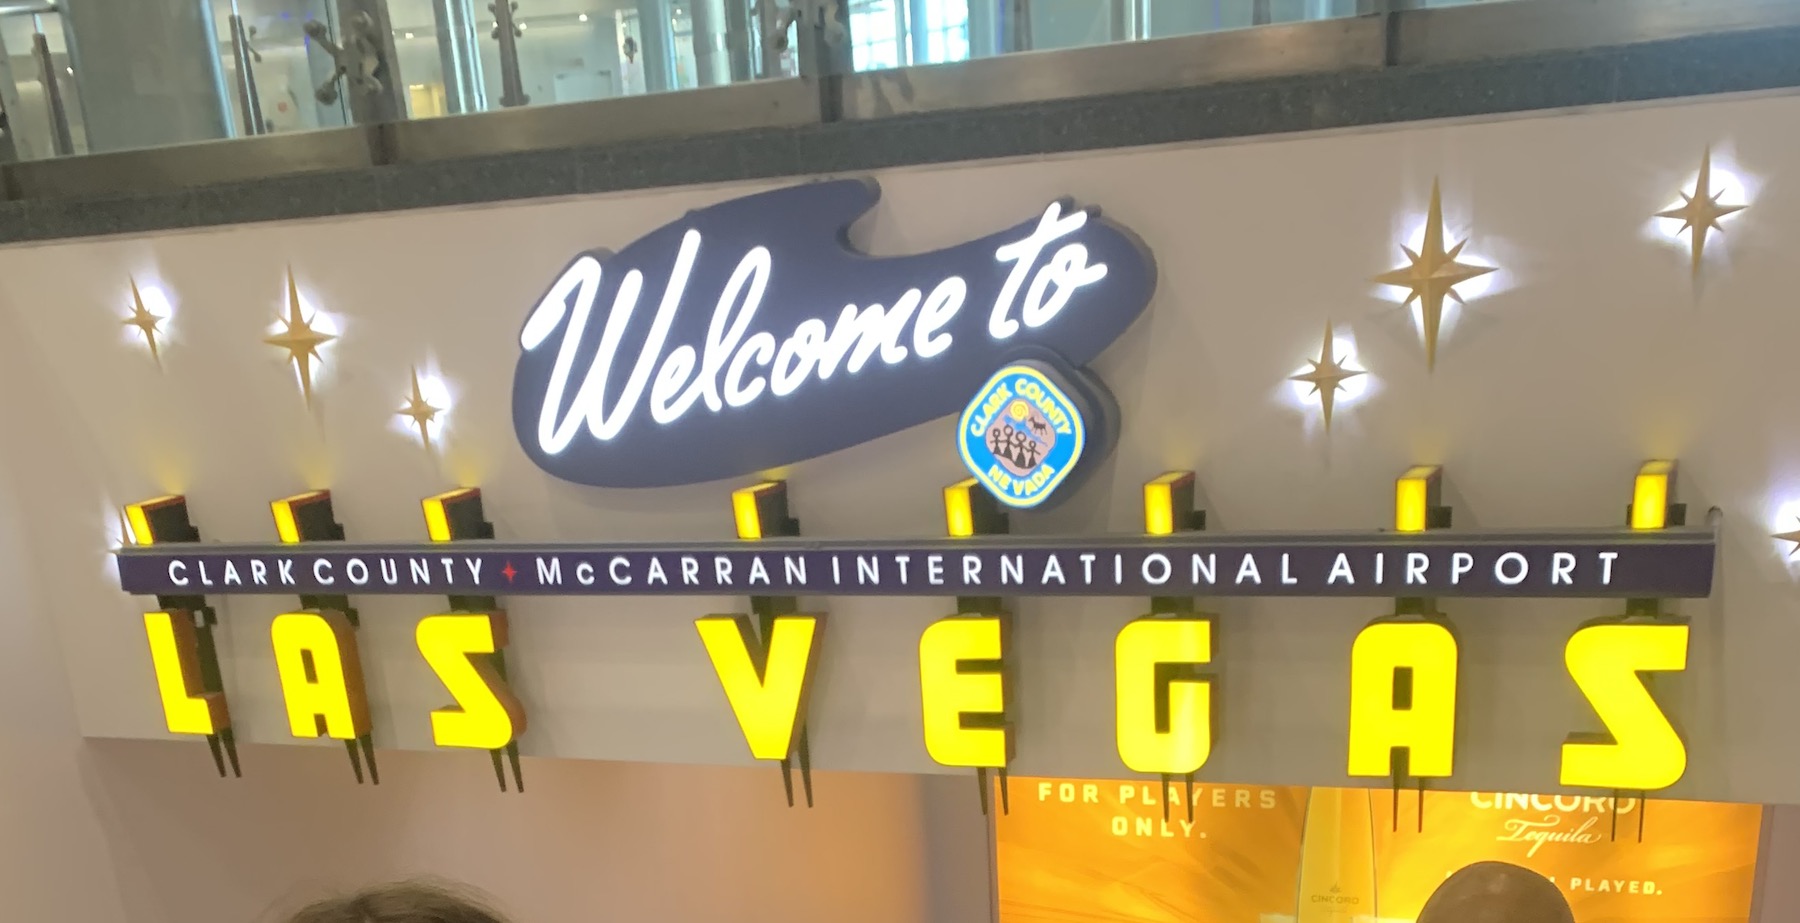 Las Vegas Sign at Airport